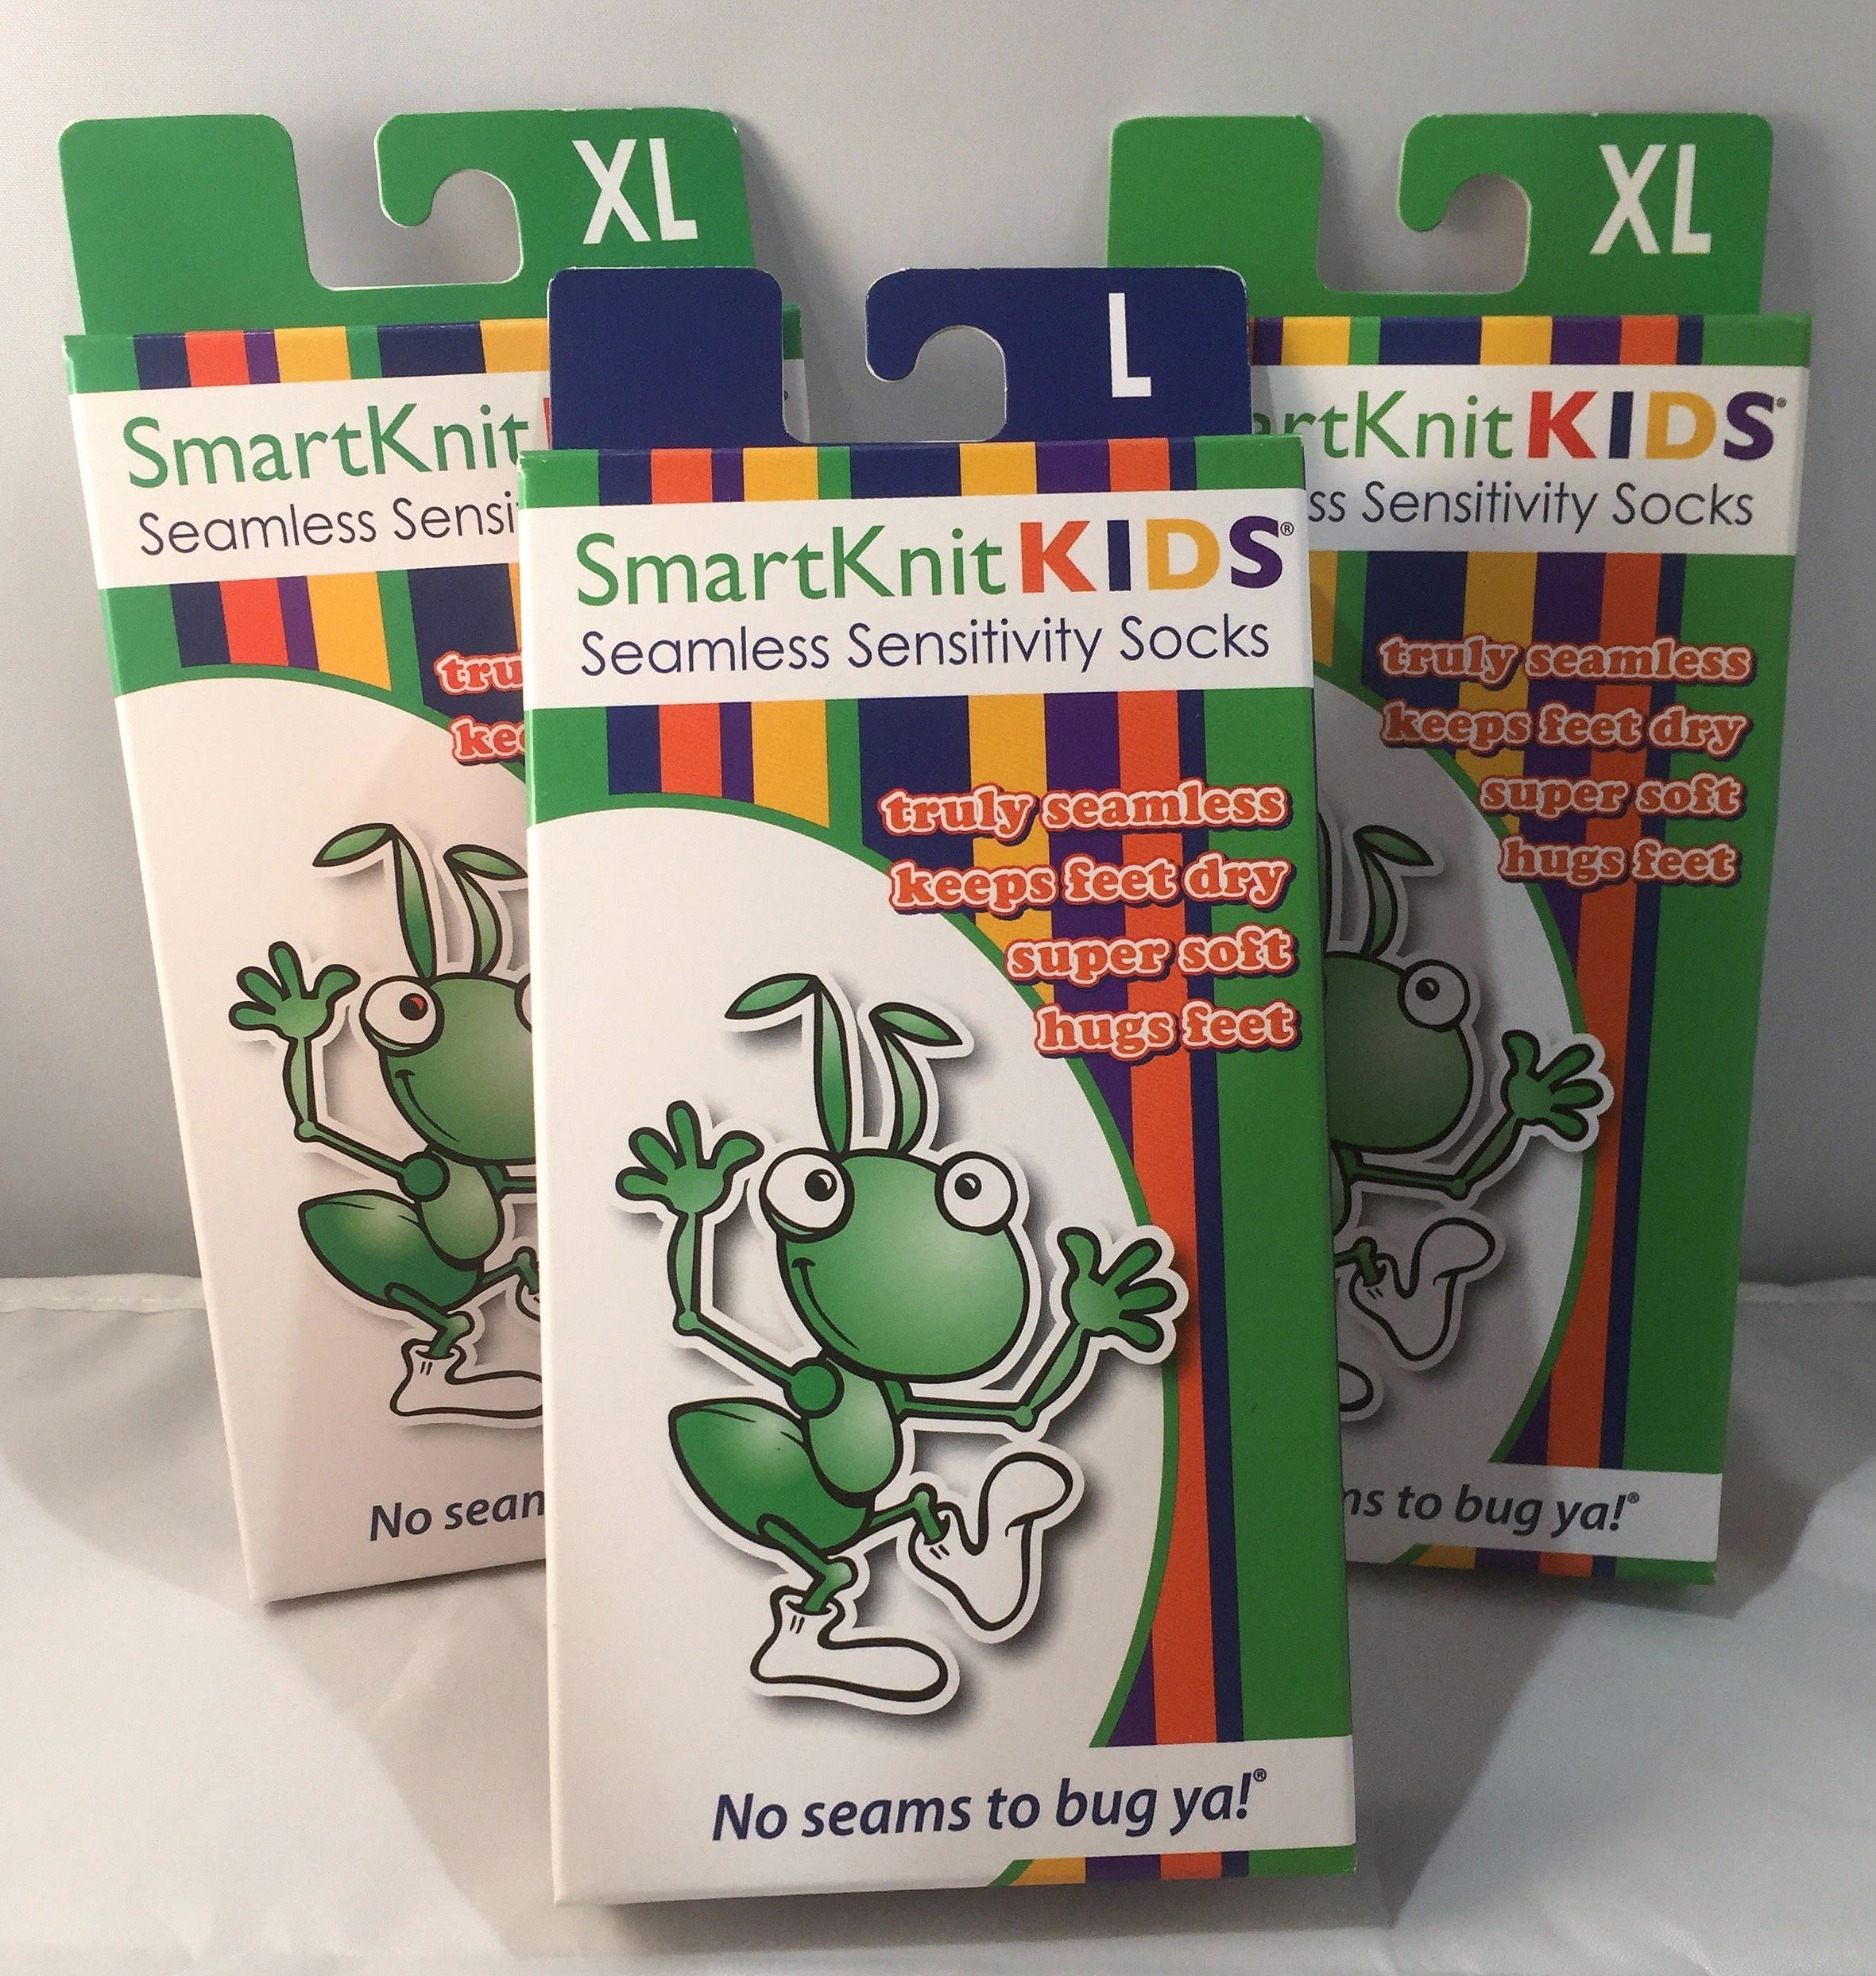 SmartKnit Seam Free Socks Image